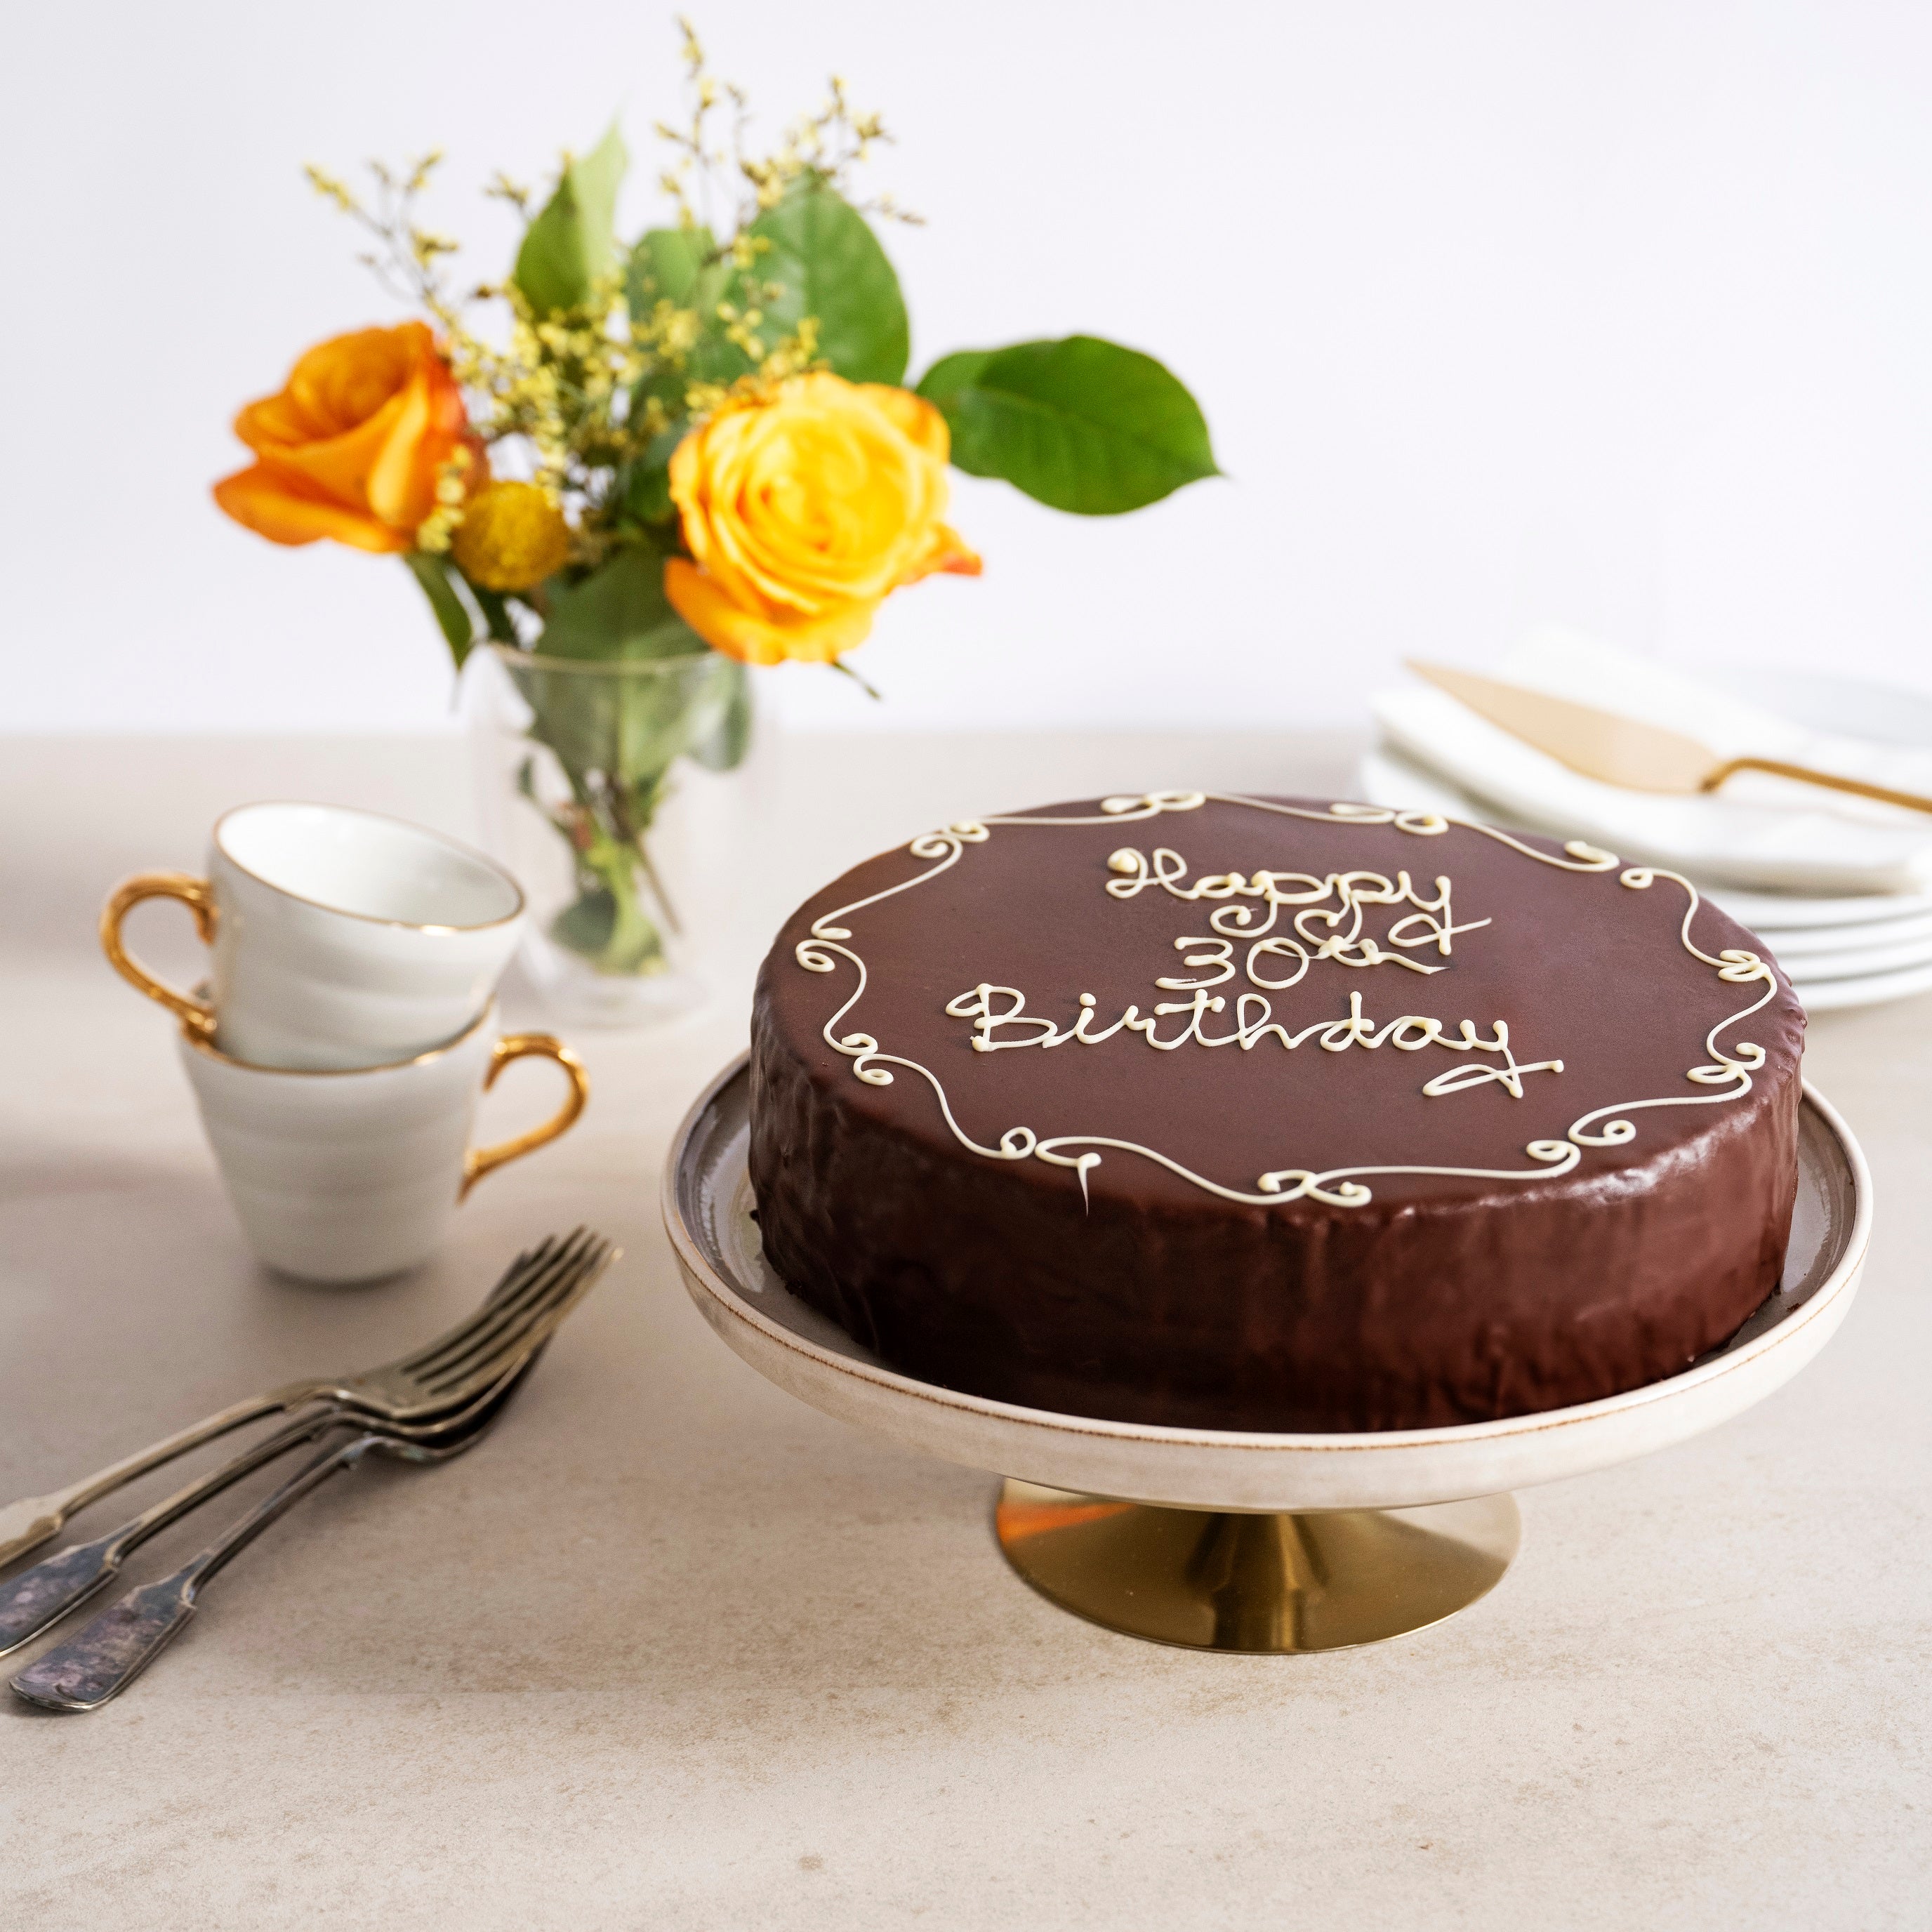 austrian celebration sachertorte cake